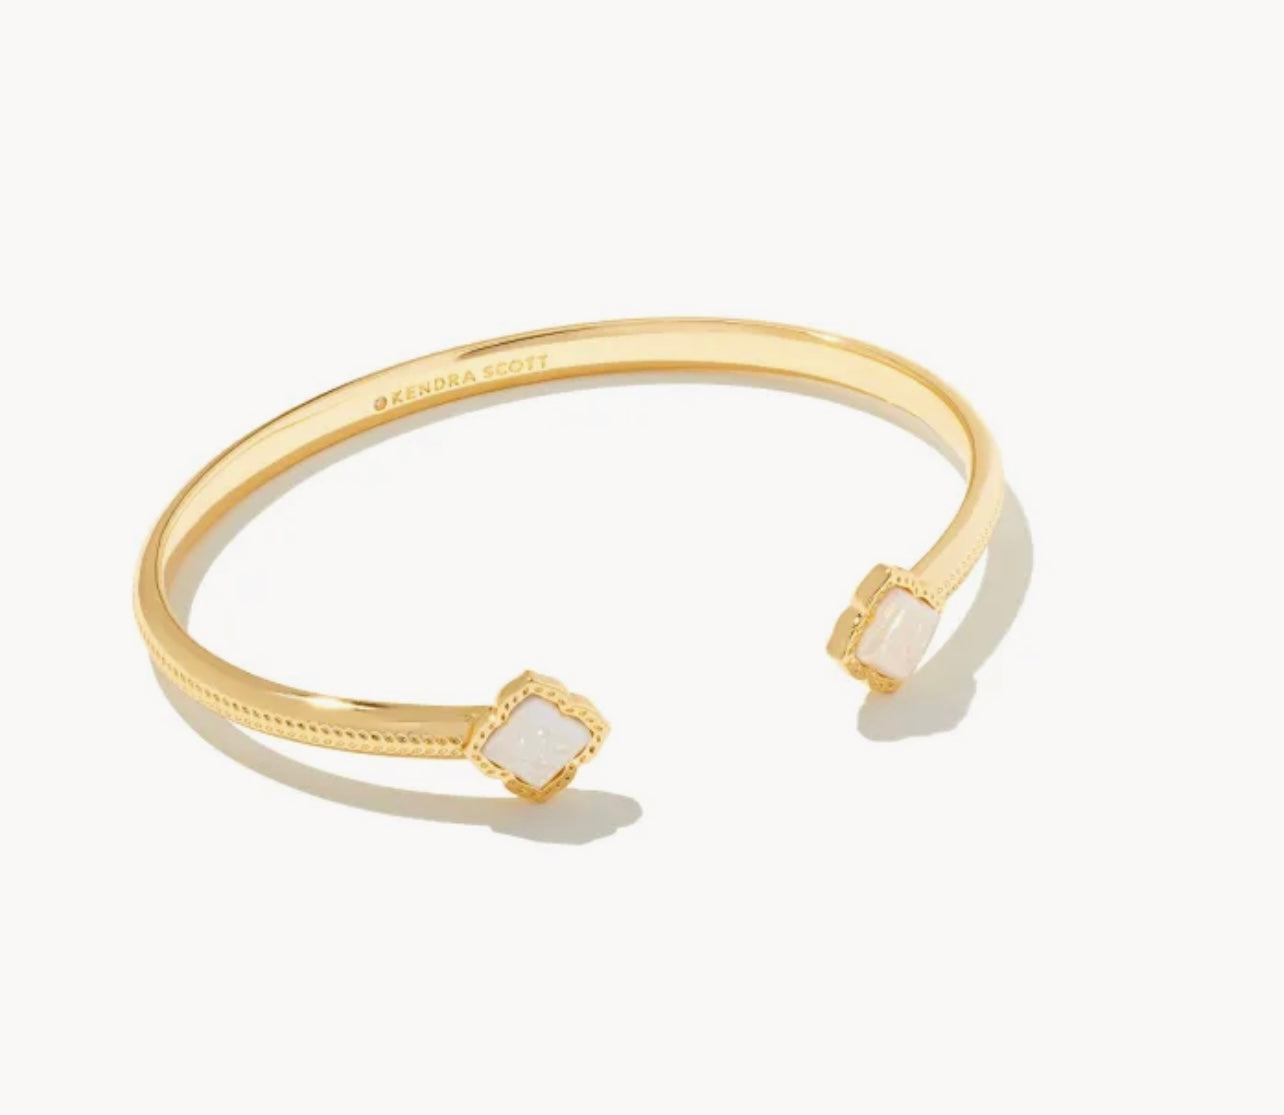 KENDRA SCOTT - Mallory Gold Cuff Bracelet in Iridescent Drusy - 9608802967